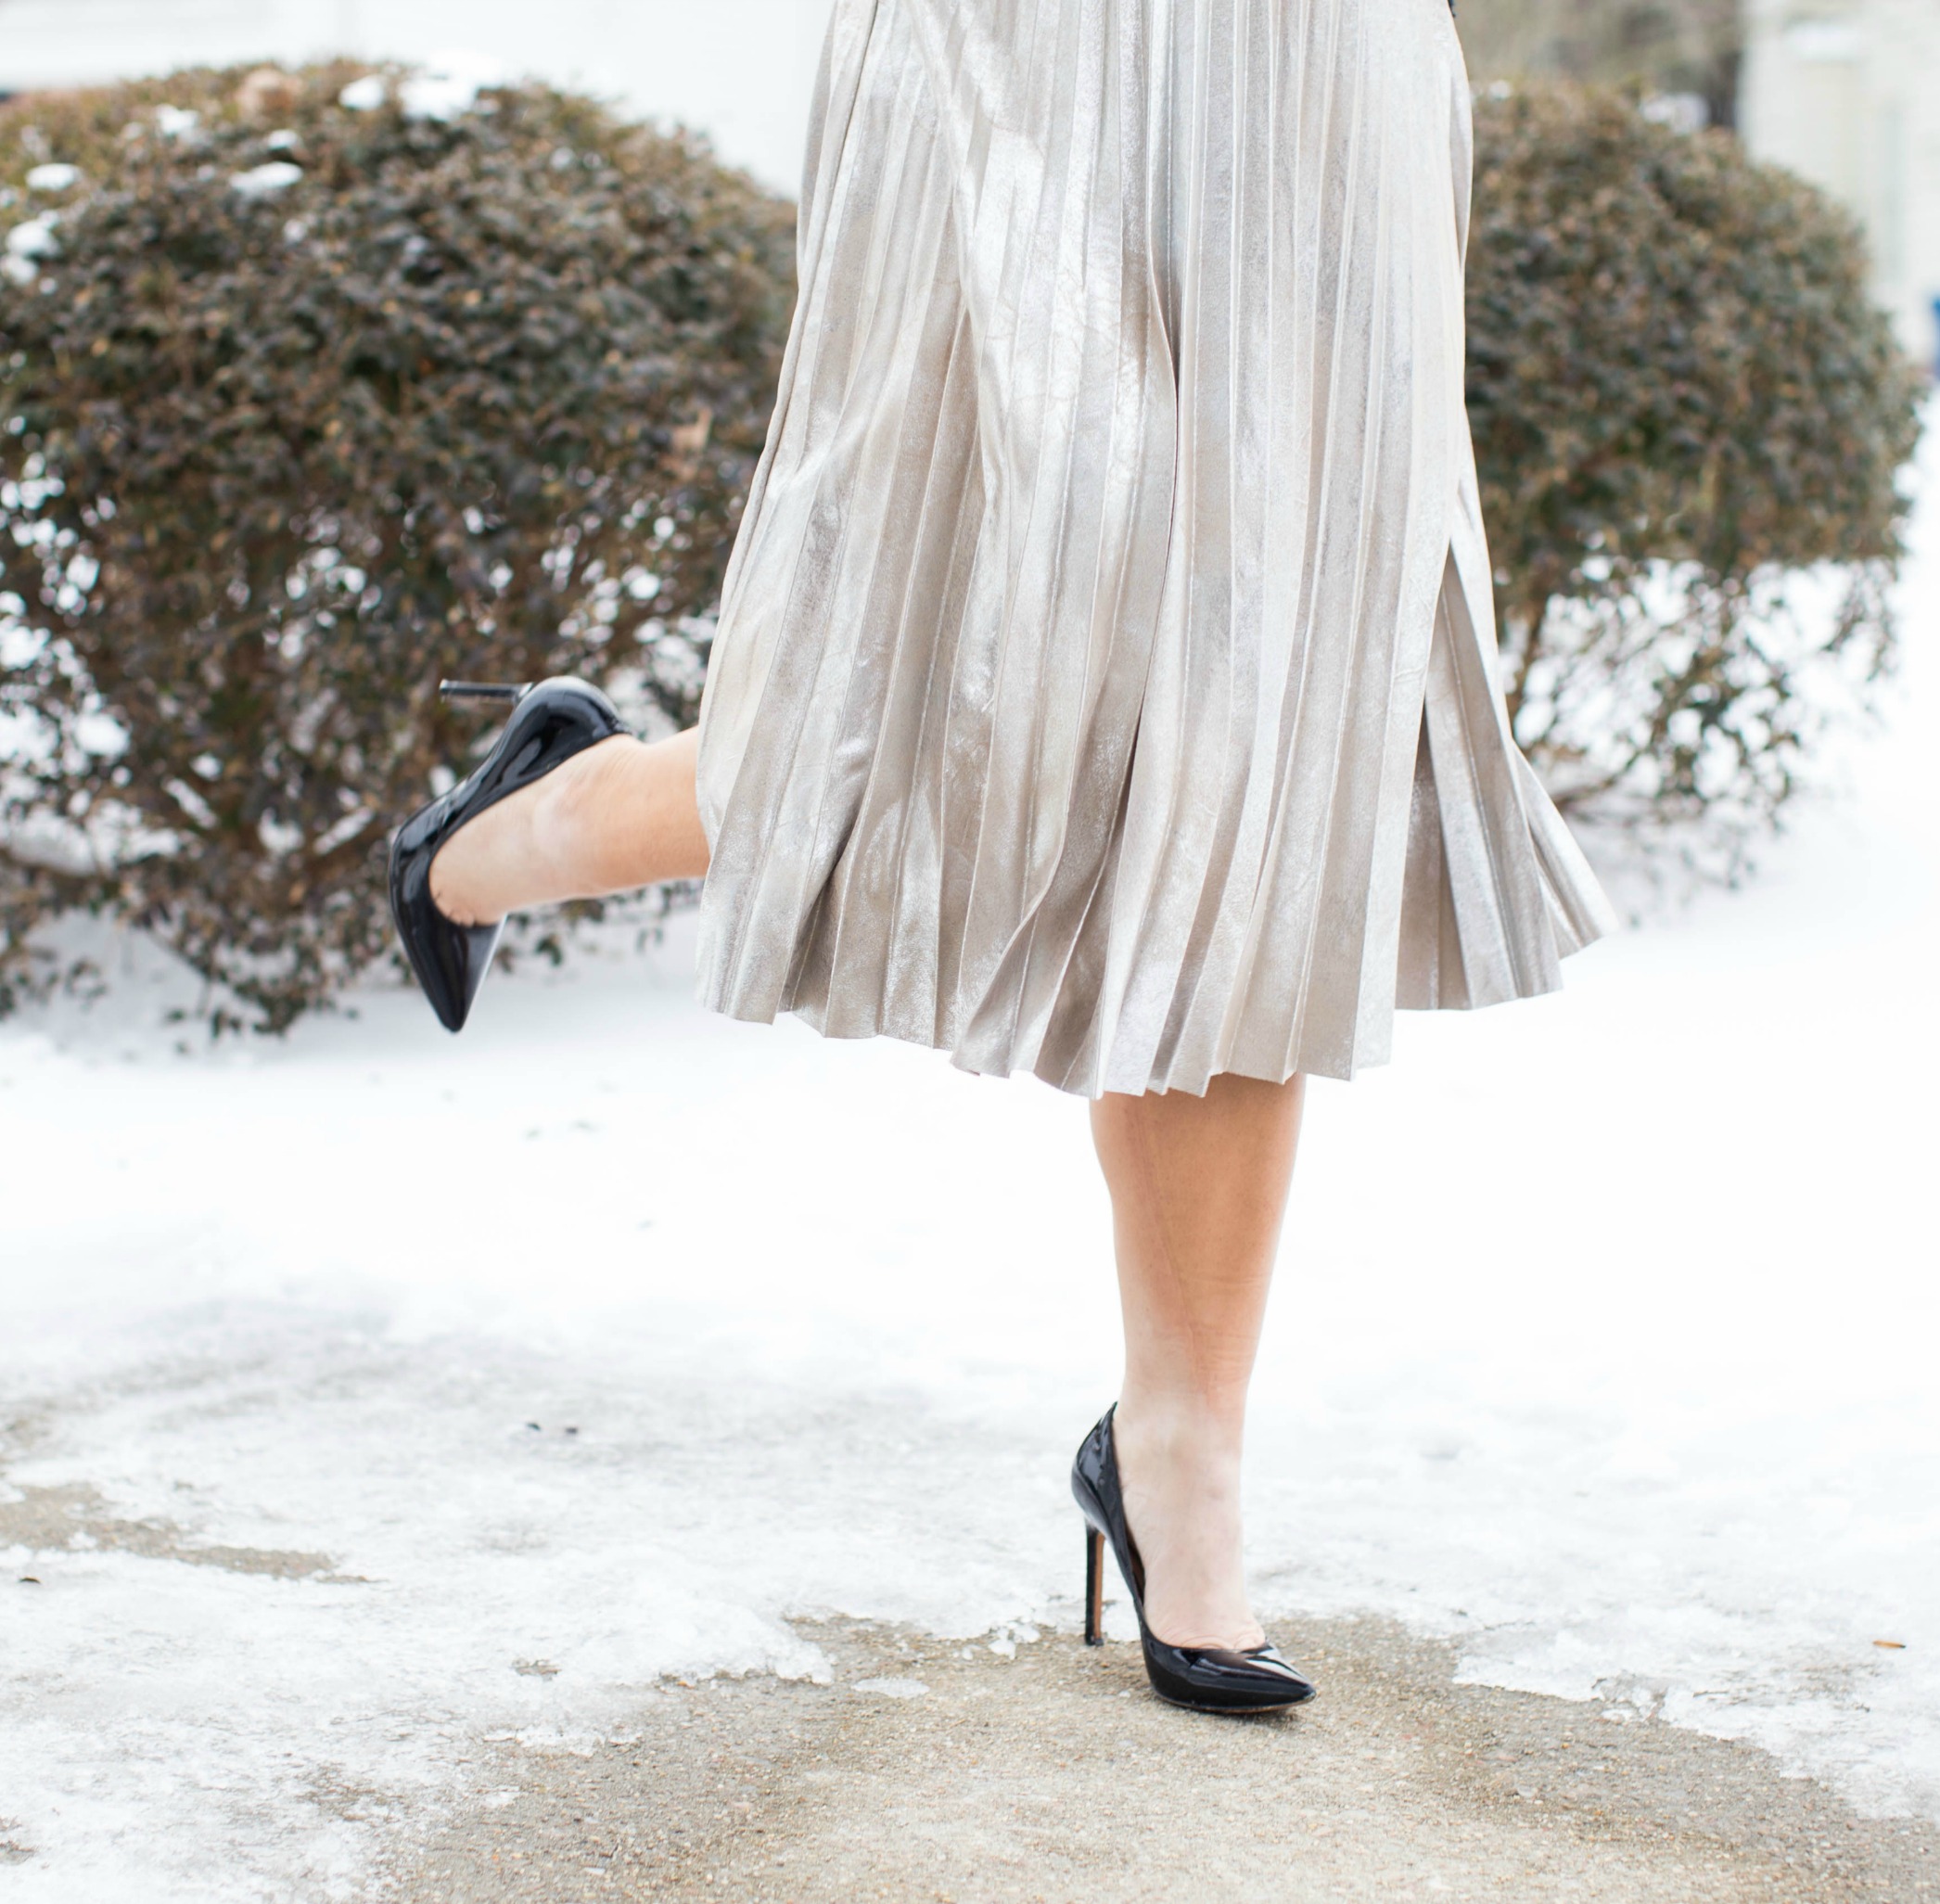 Pleated Metallic Skirt | Wearing Metallics after the holidays | coffeebeansandbobbypins.com | @Amy_cbandbp